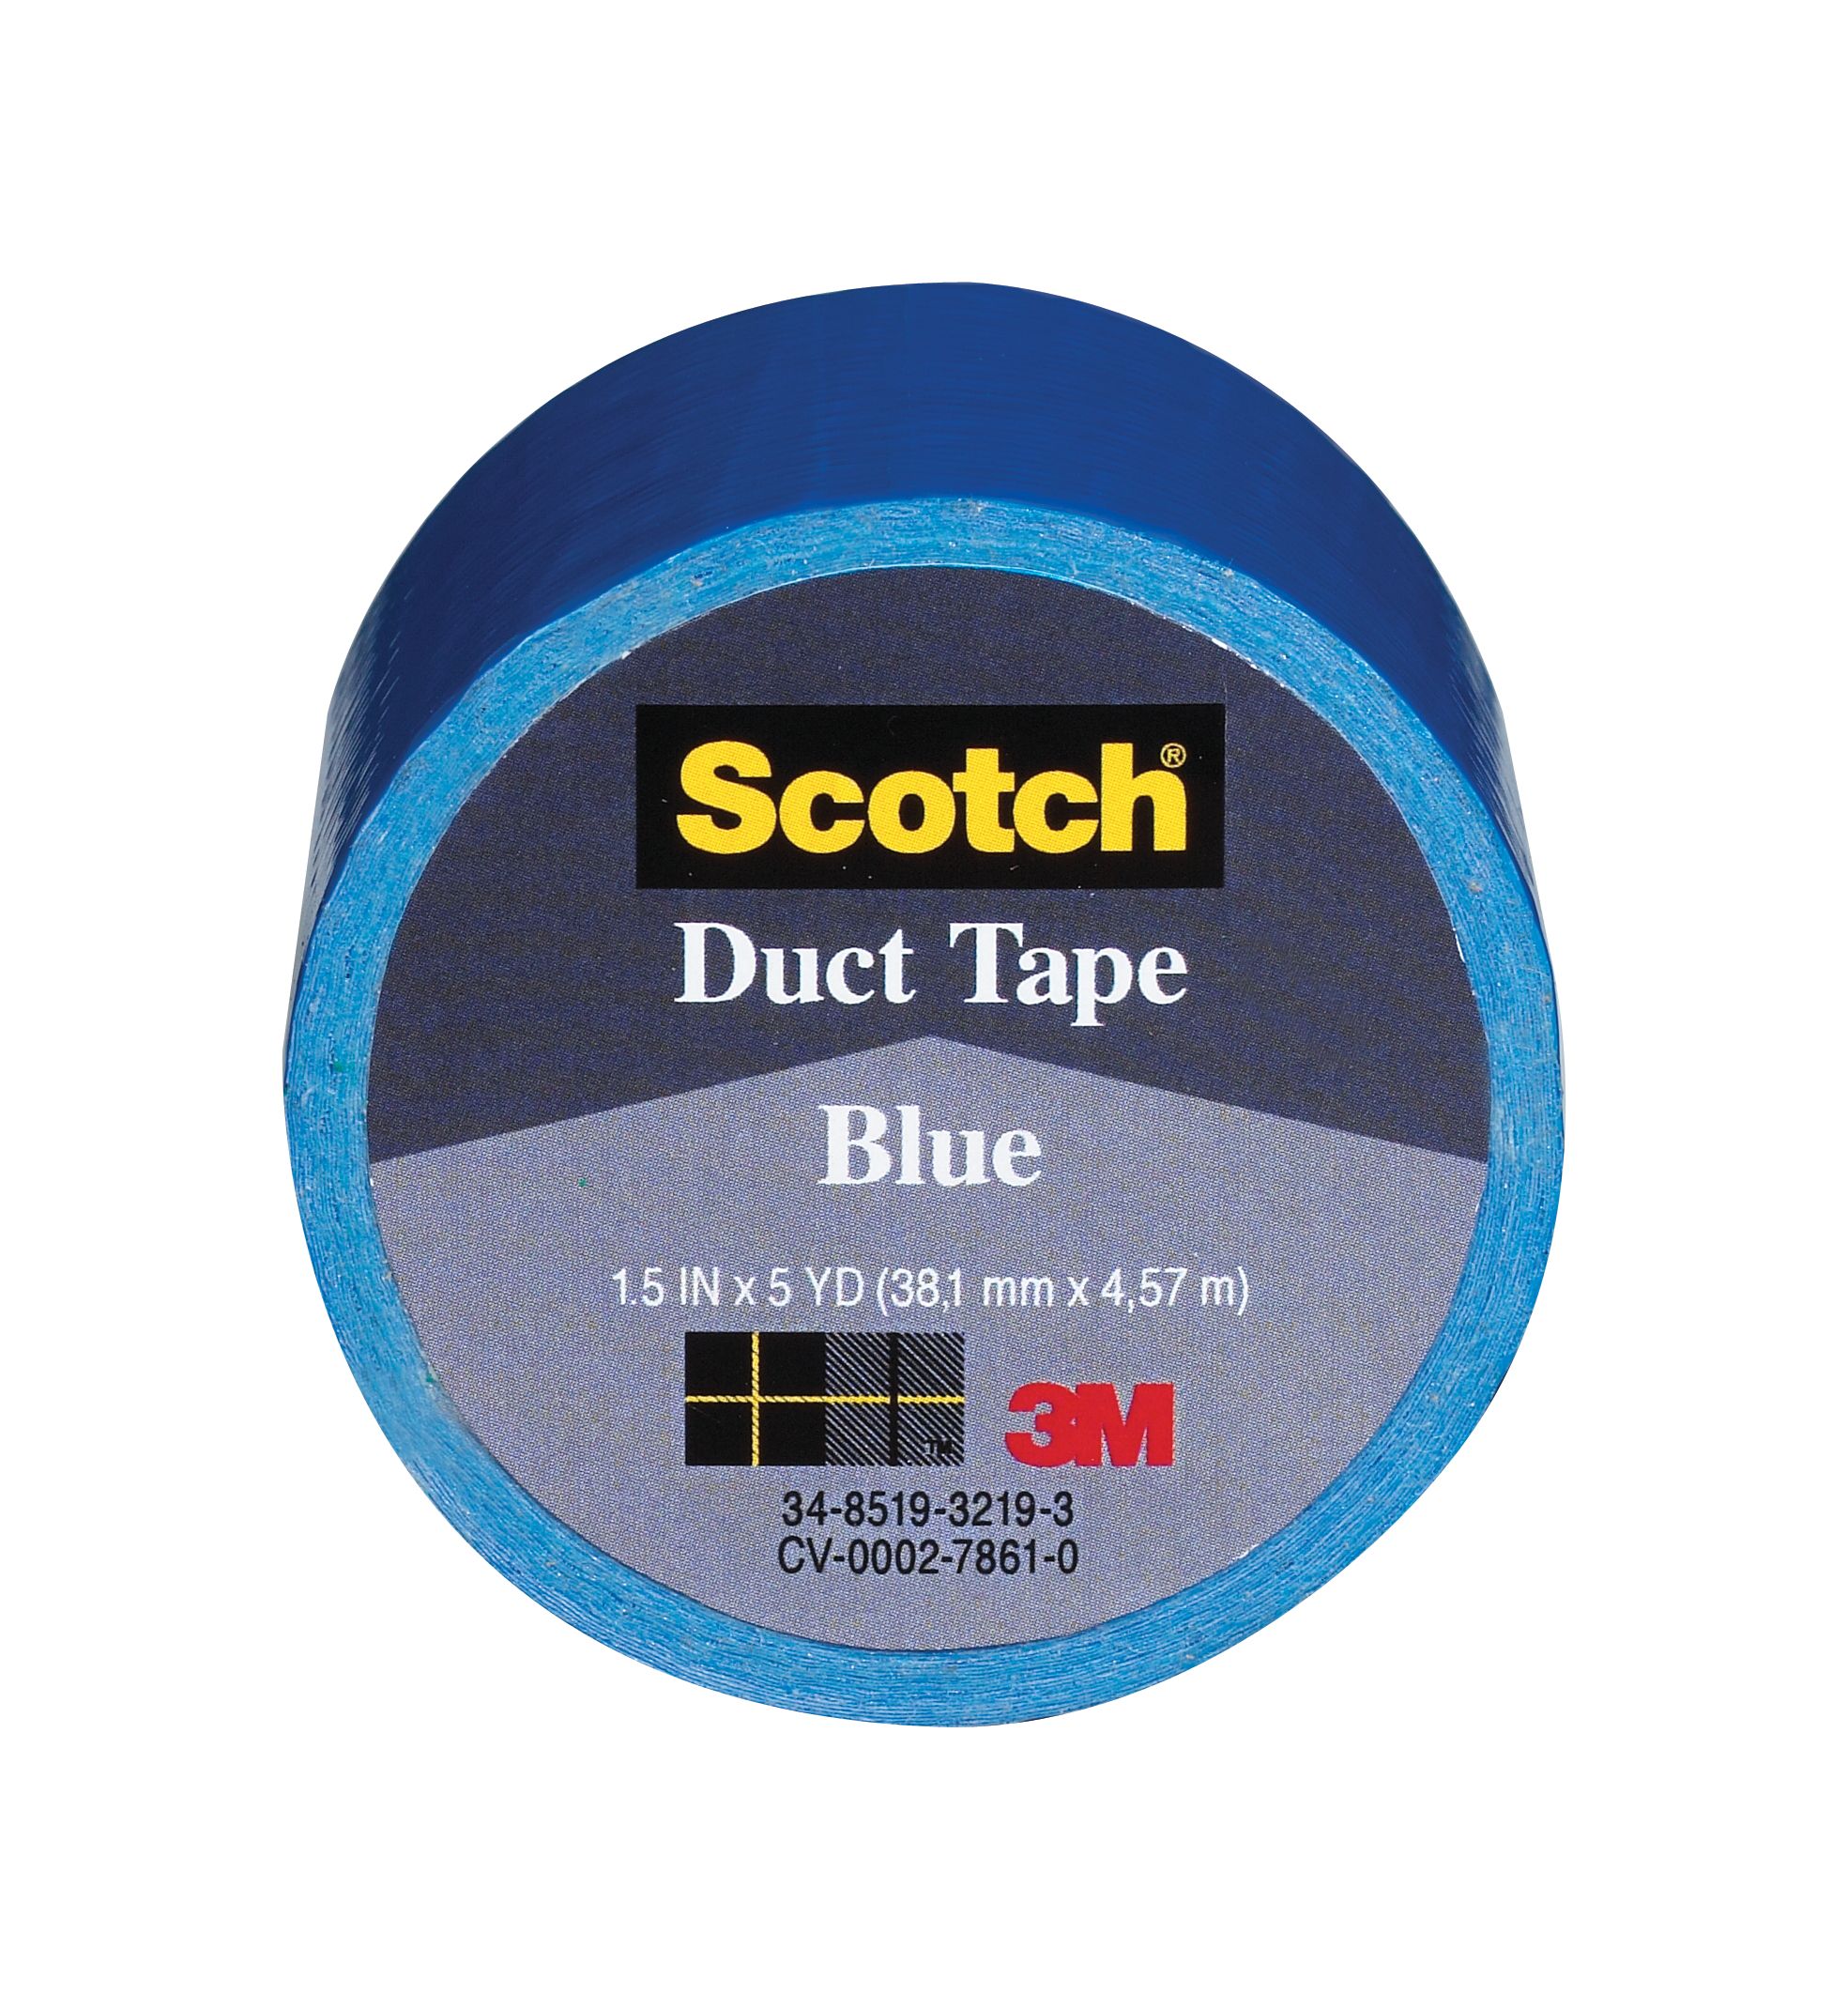 Scotch Duct Tape Blue 1.5 in x 5 yd 6 rls/inner